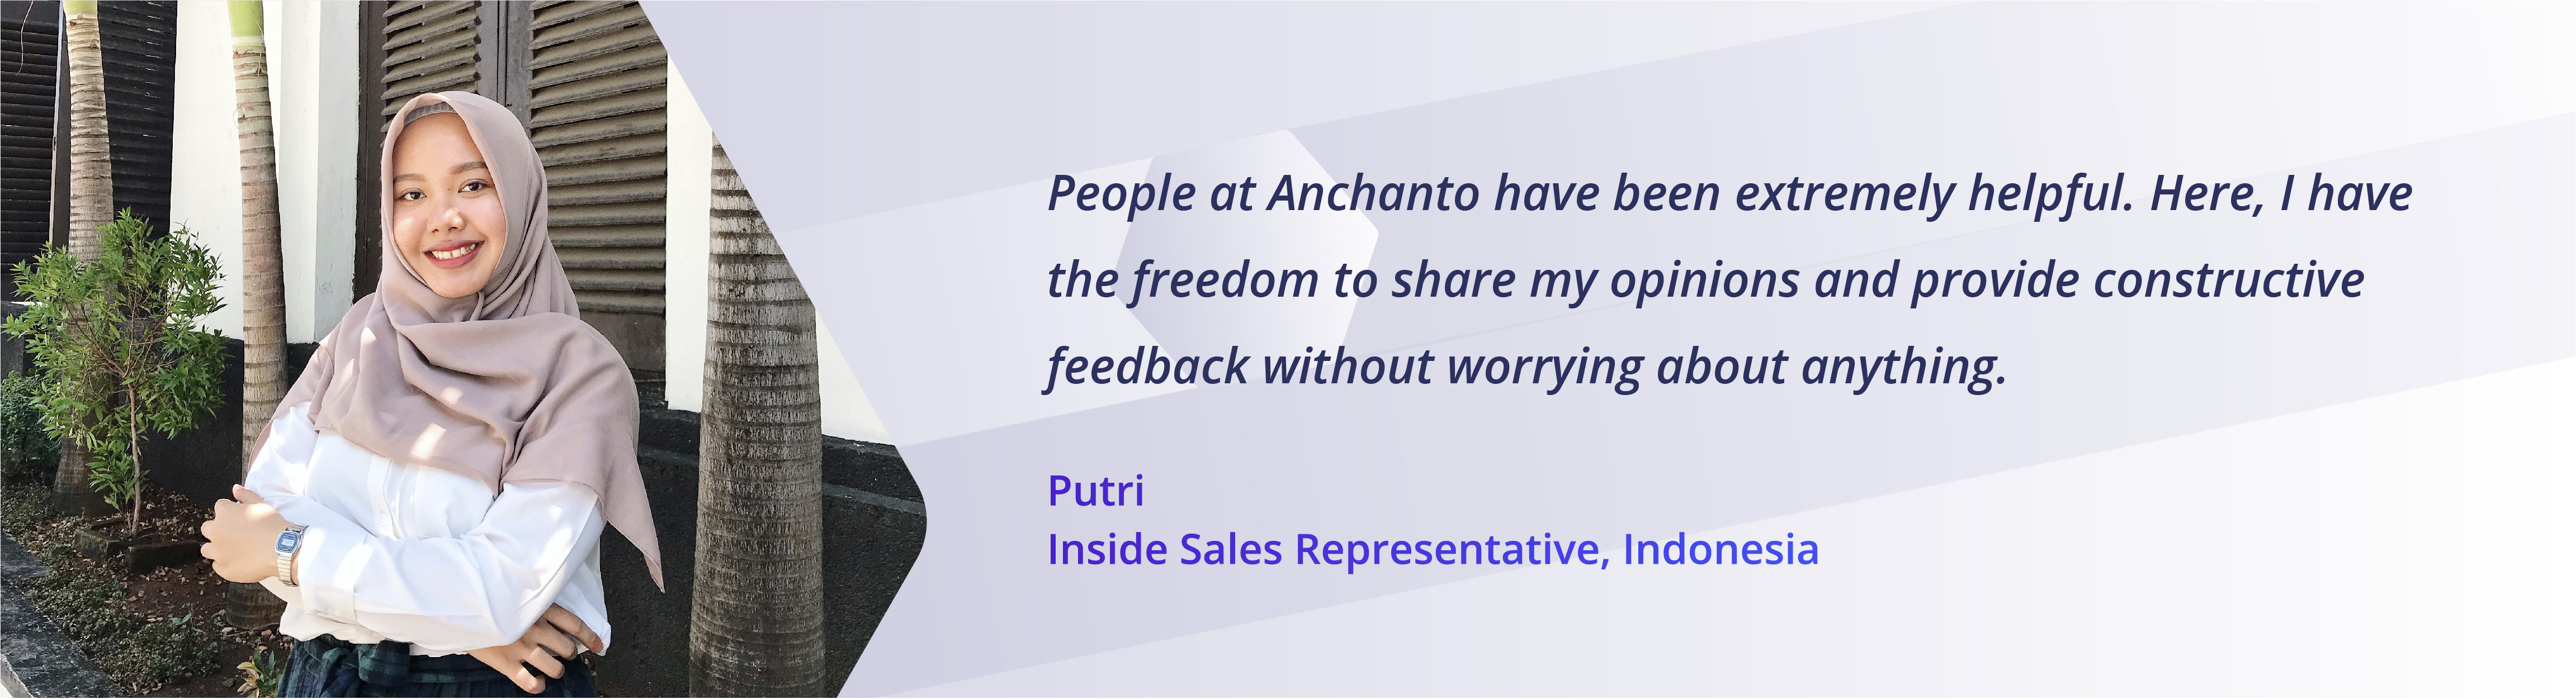 Putri, Inside Sales Representative, Indonesia